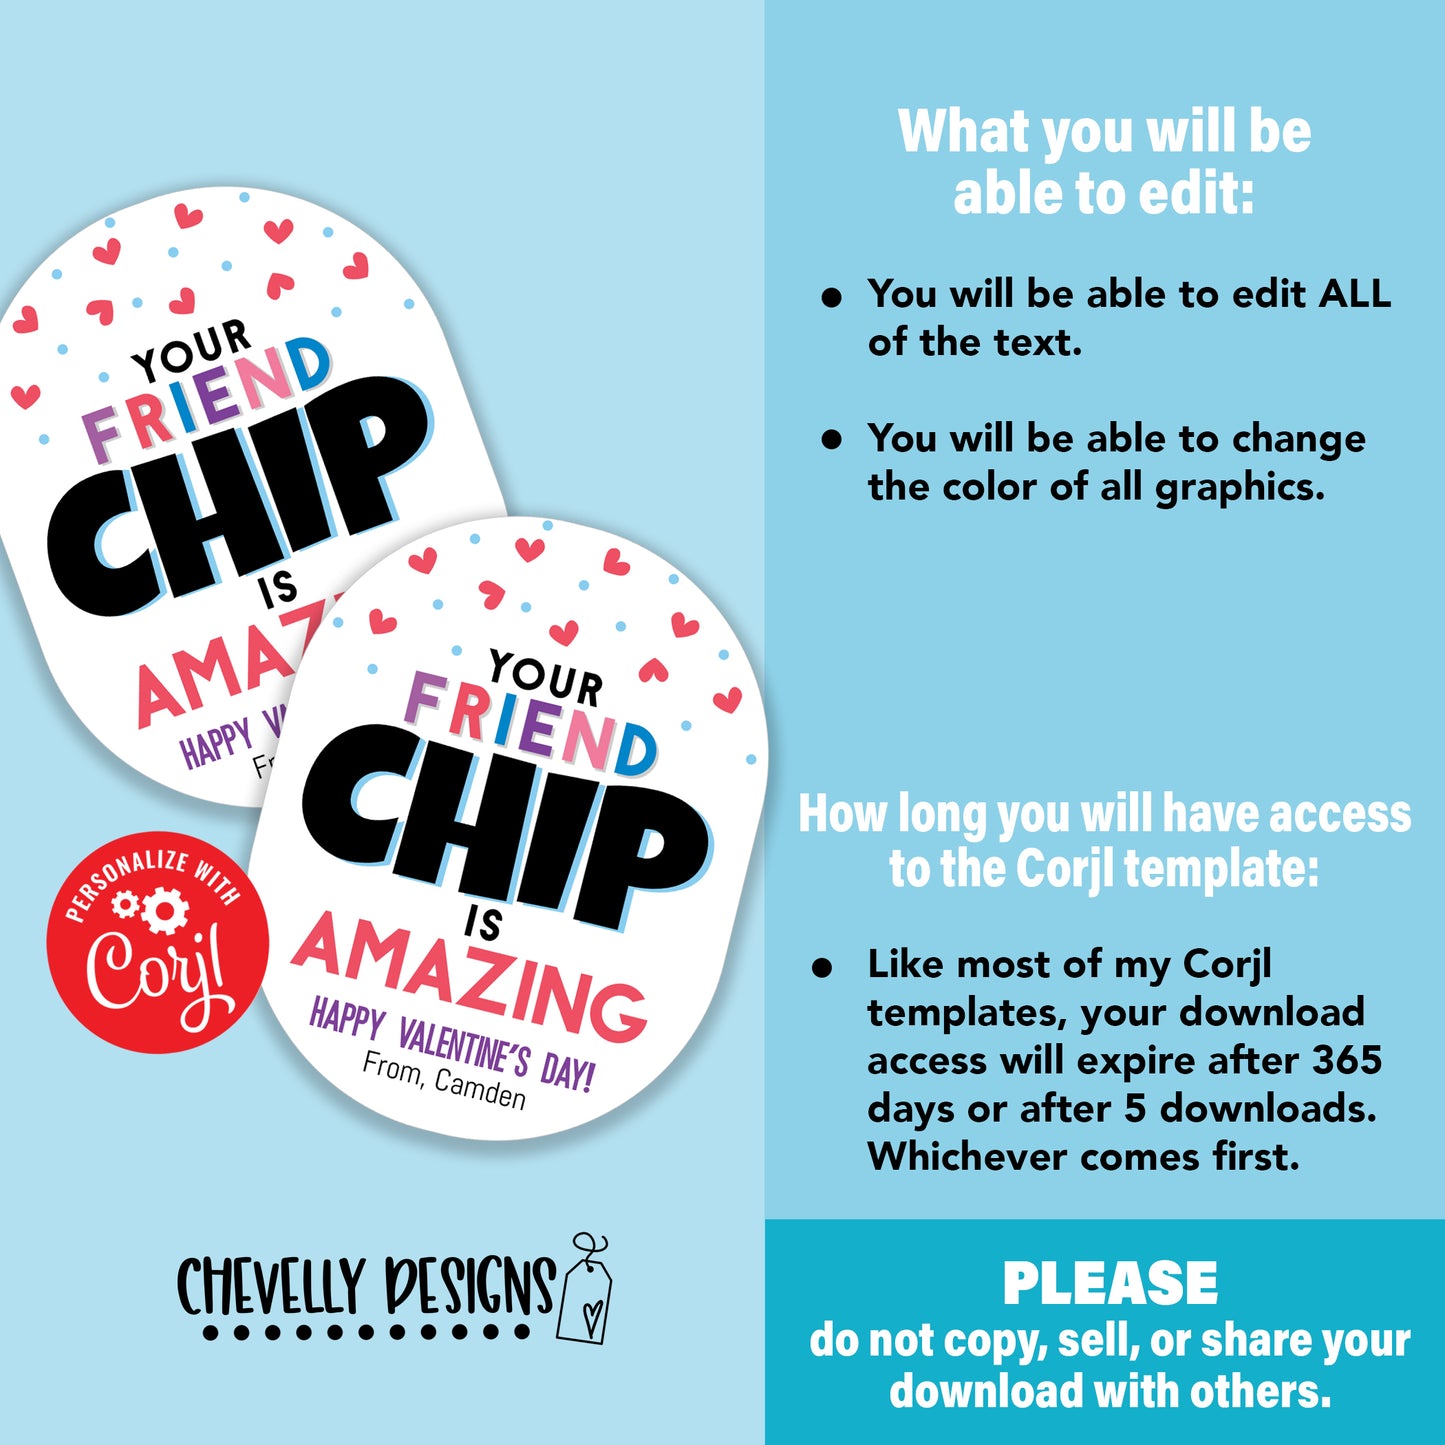 EDITABLE - Friend Chip Valentine Cards - Printable Class Valentine's Day Cards - Digital File